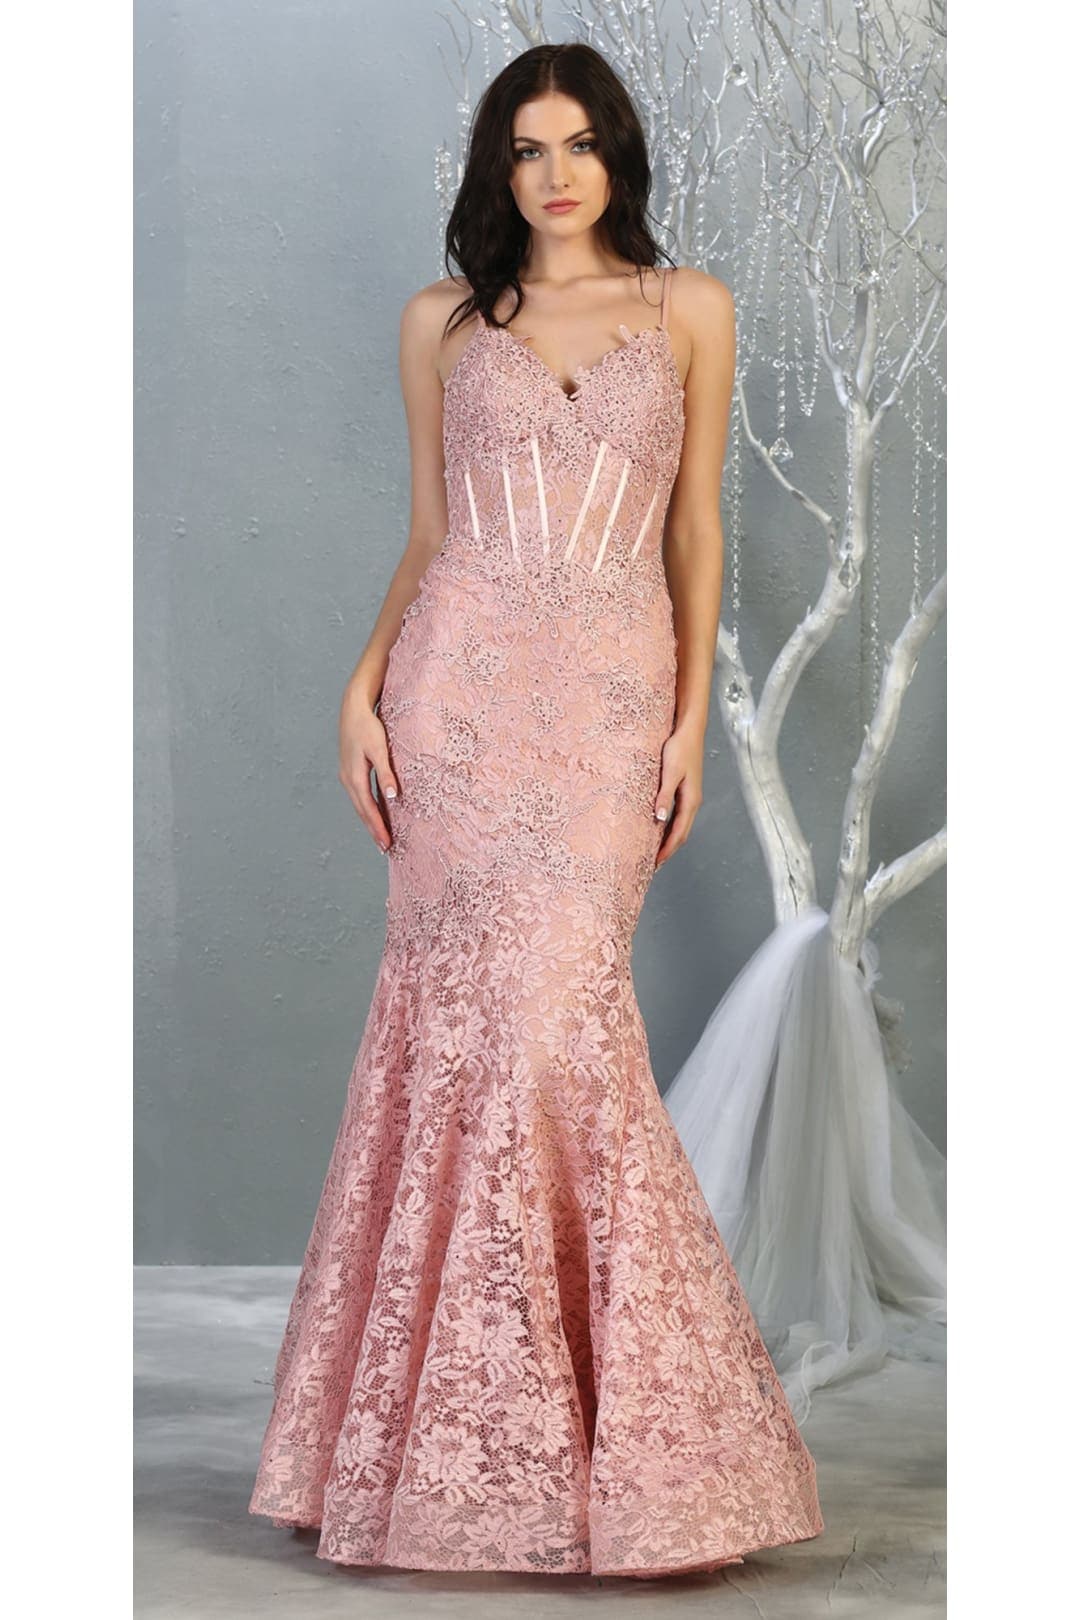 Lace Mermaid Evening Gown - LA7865 - Dusty Rose / 4 - Dress